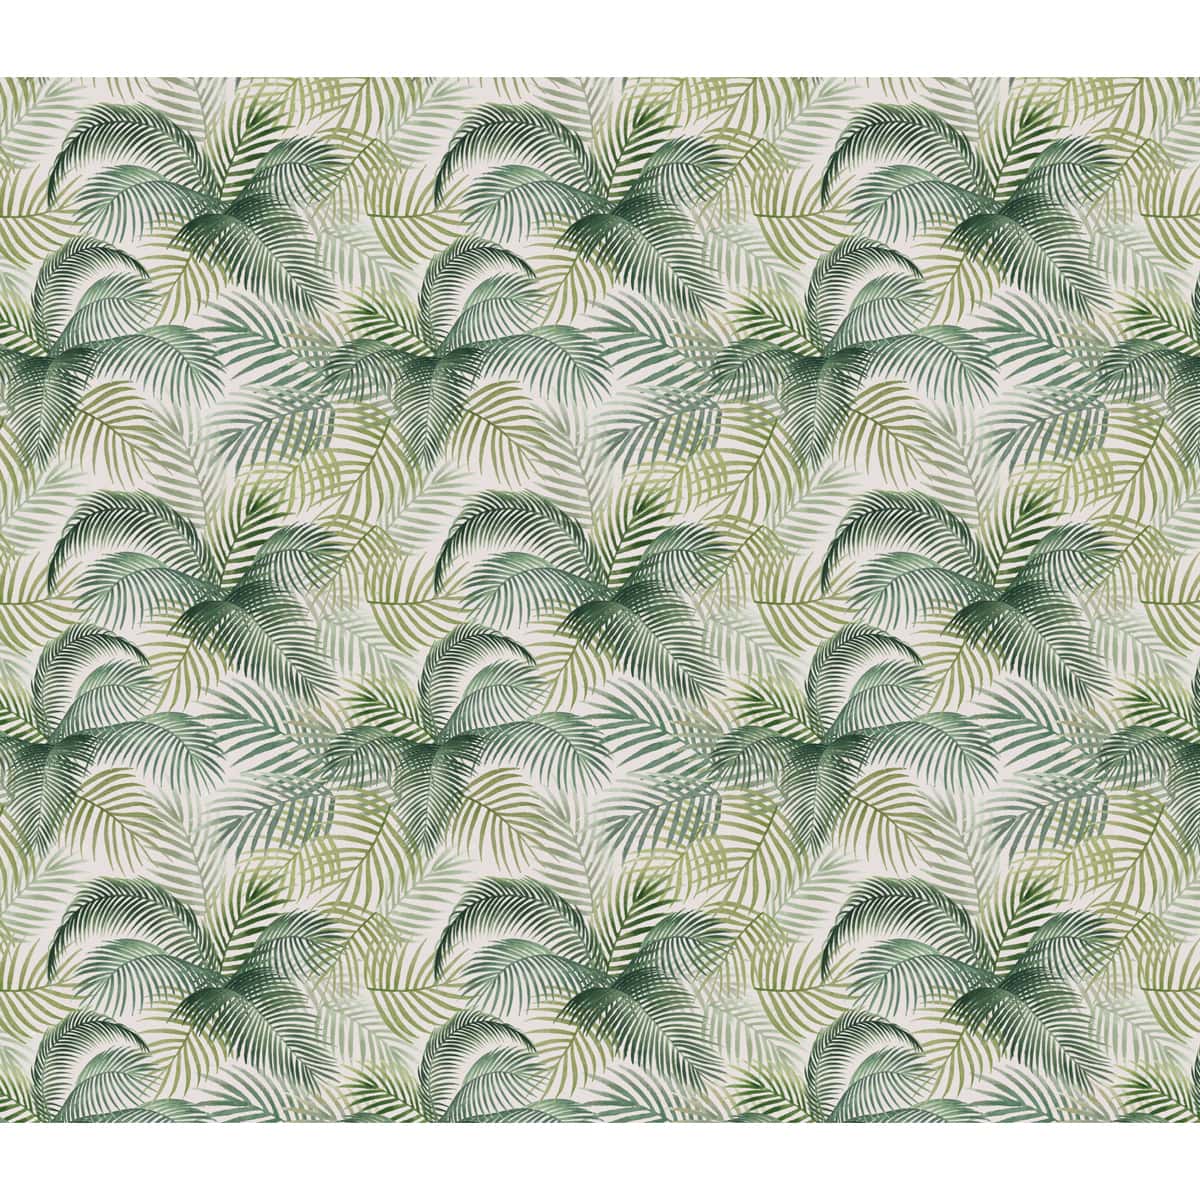 Tropical Green Leaves Wallpaper, Customised